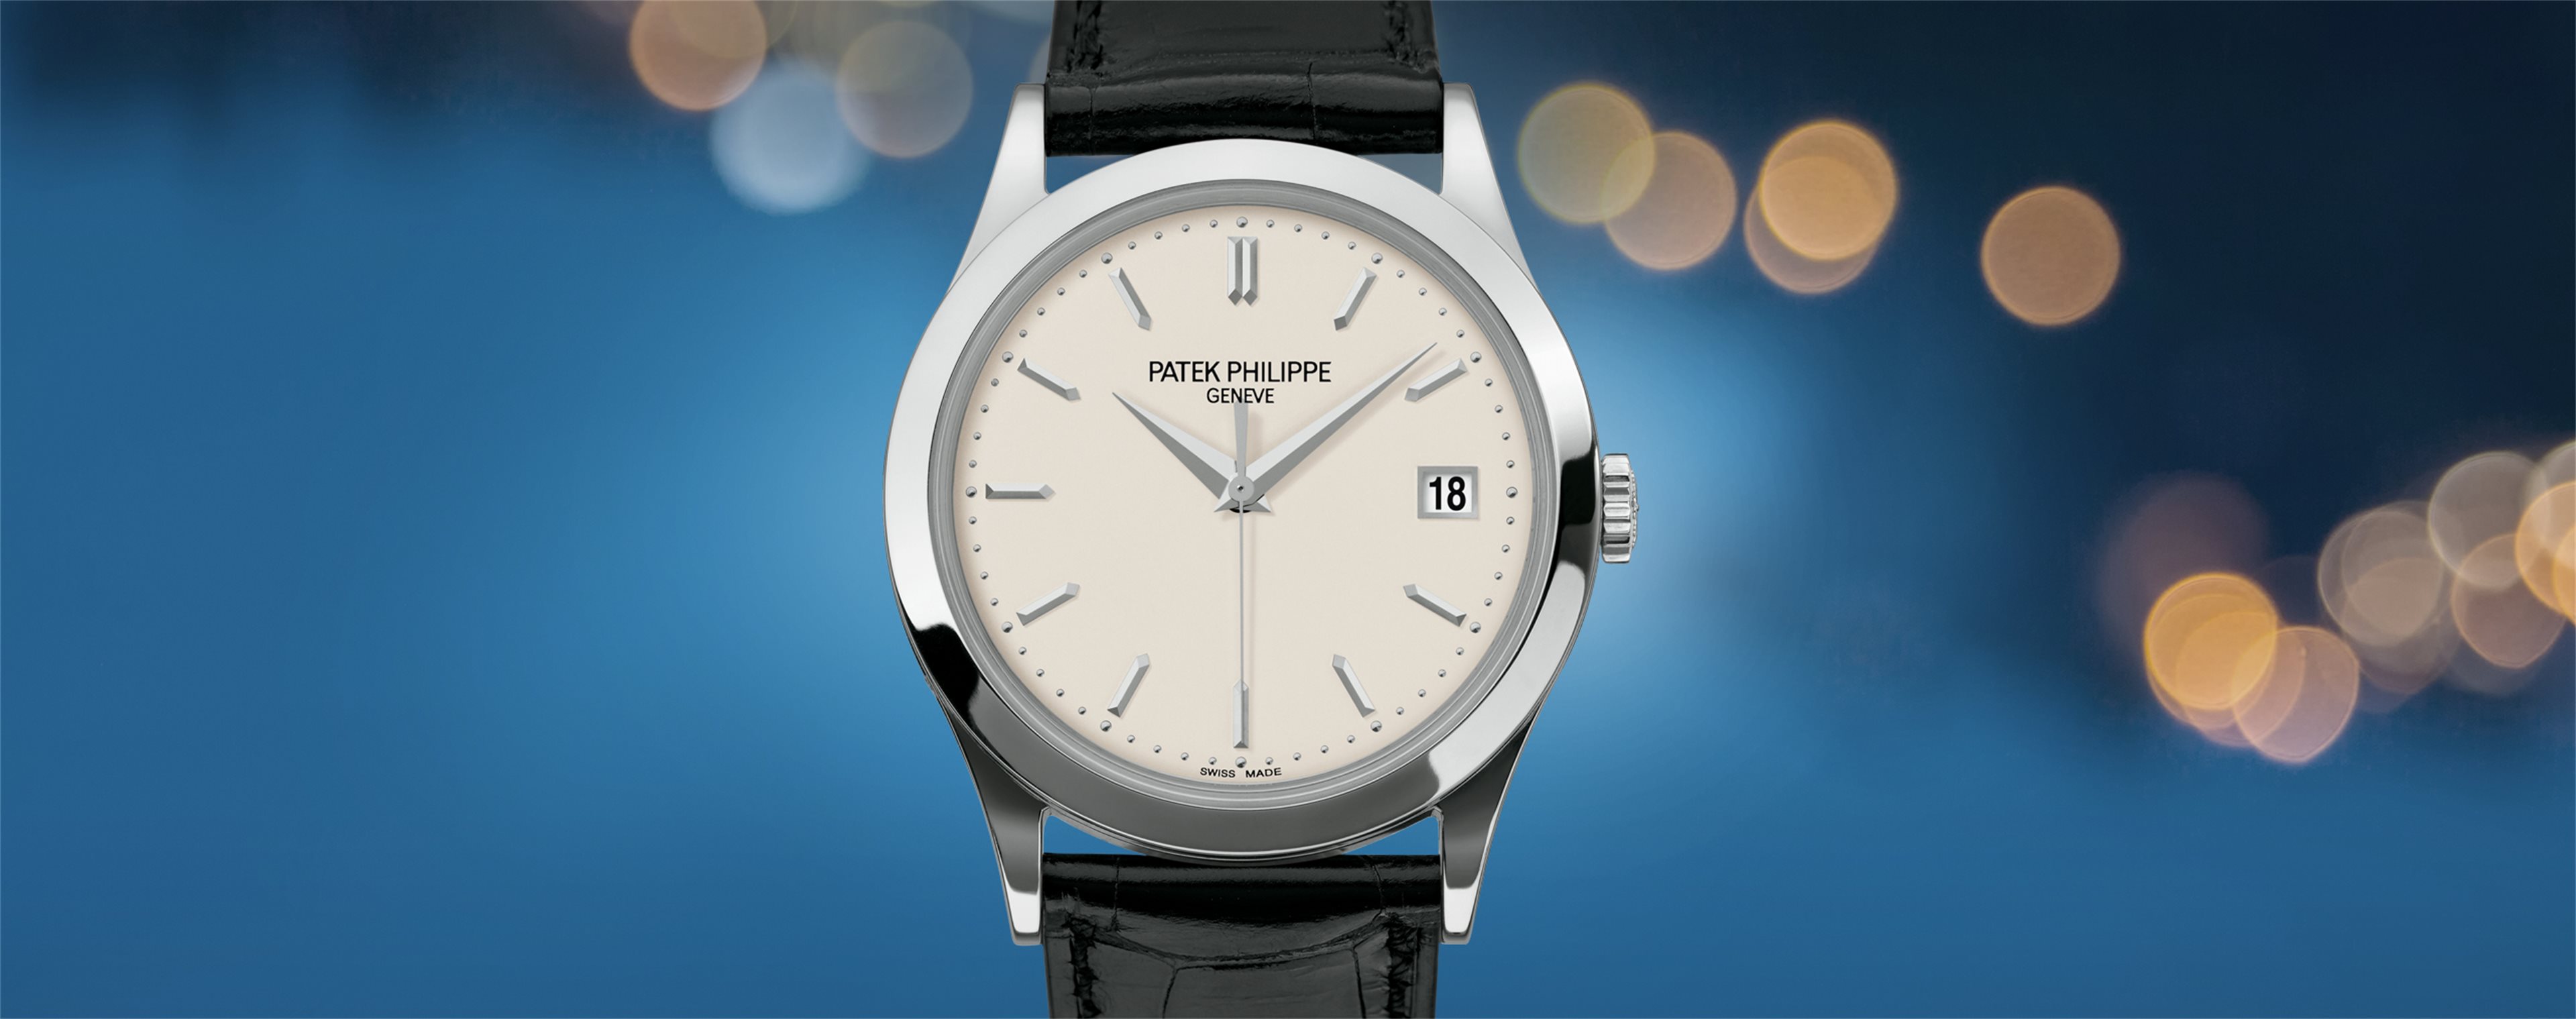 Patek Philippe Calatrava 18K (0.750) Gold Hand-Held Men's Watch Ref. 5022 B&P